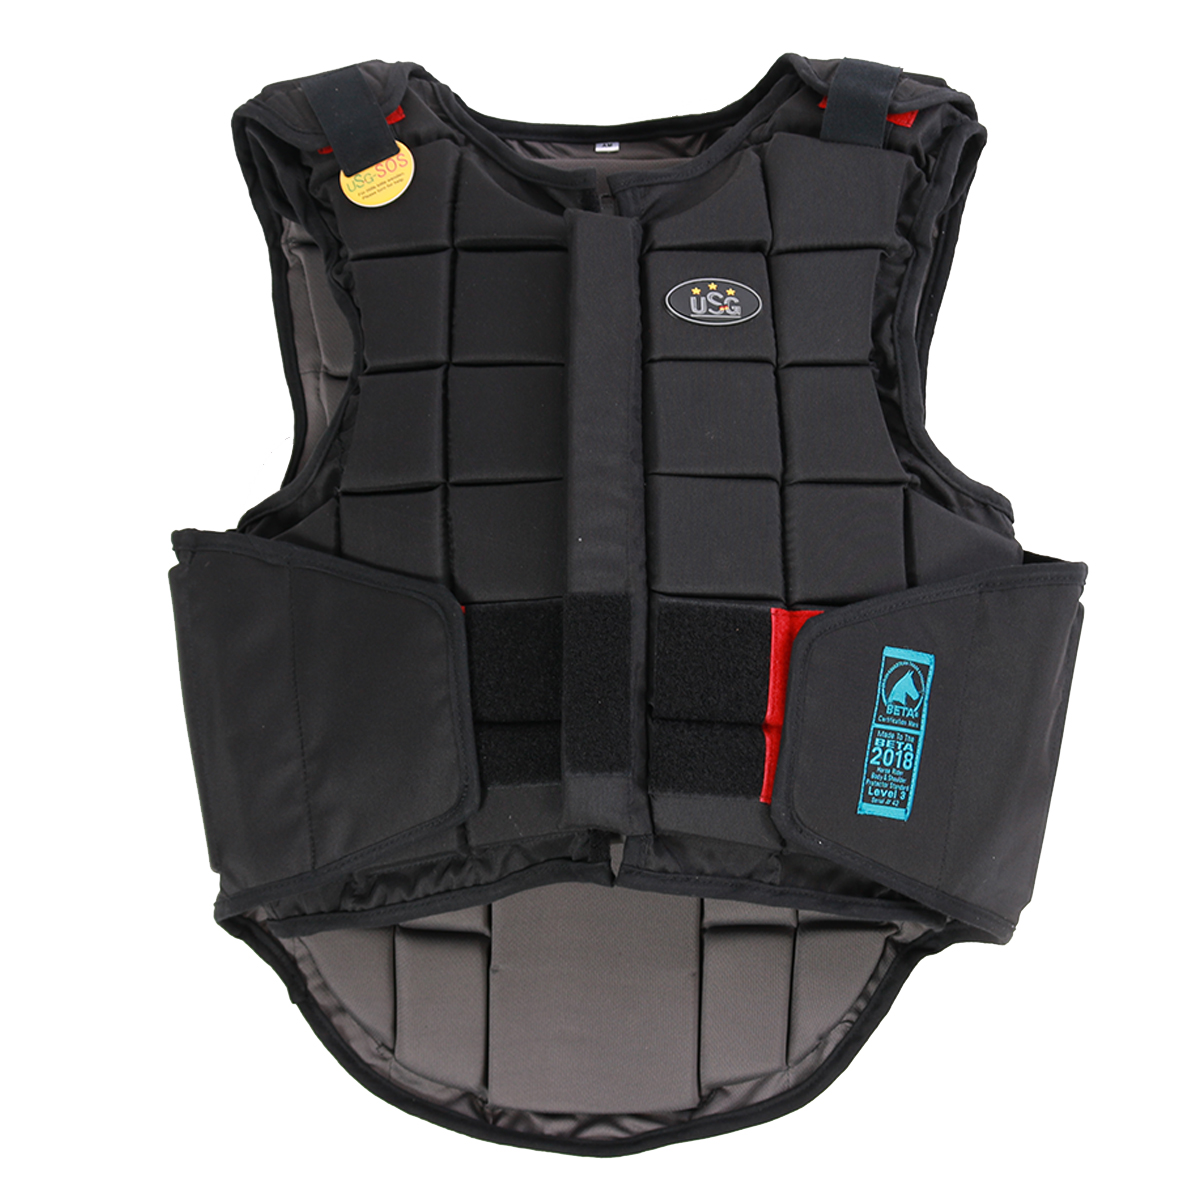 Bodyprotector Usg Flexi Adult Zwart, XL in zwart